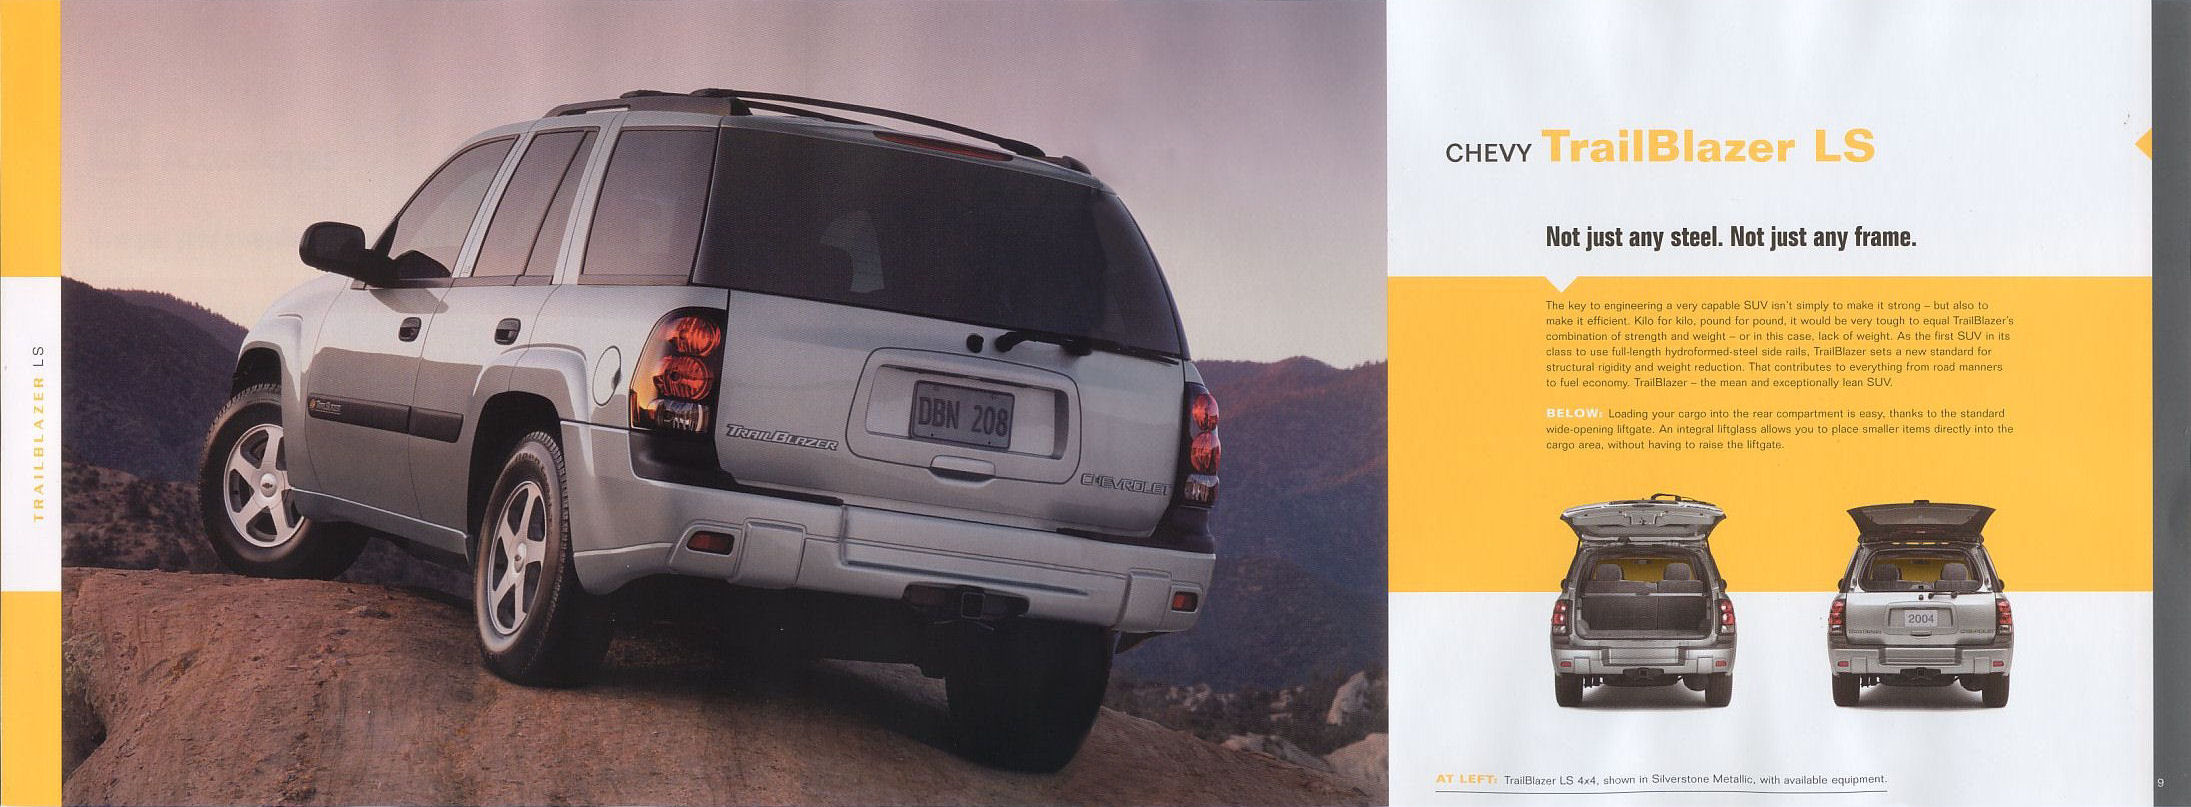 2004 Chevrolet Trail Blazer brochure